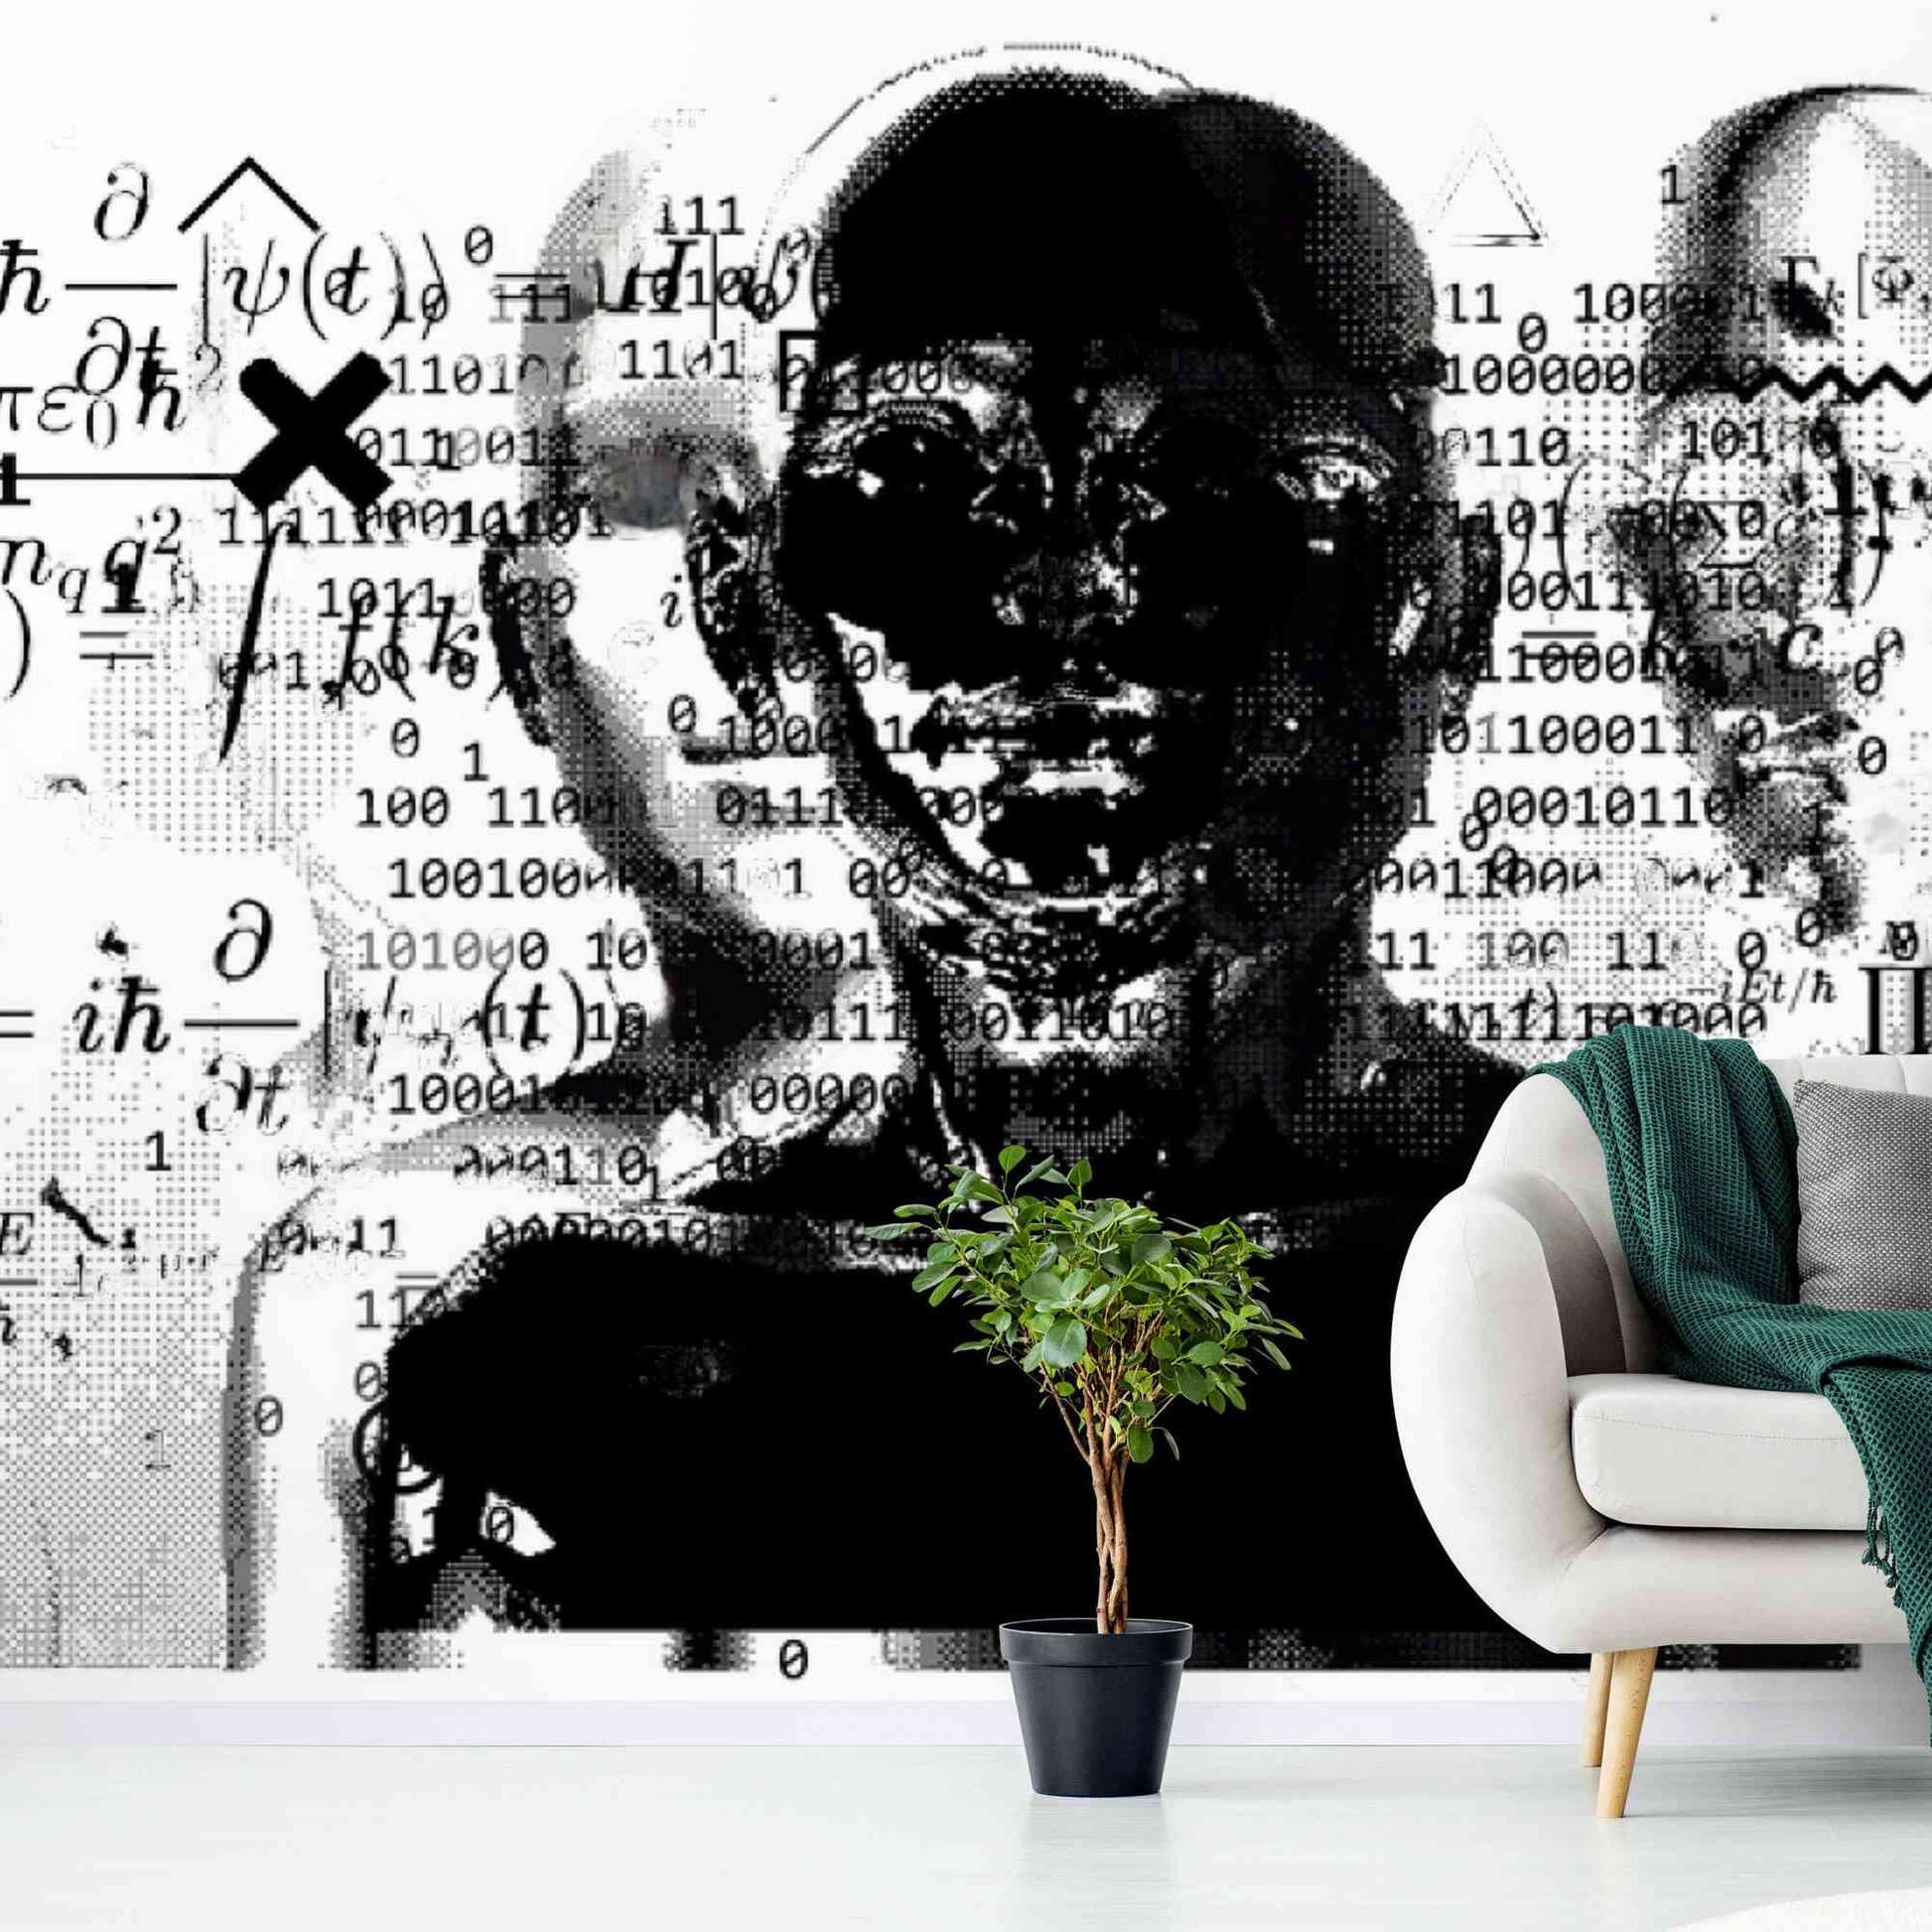 Black and white cyberpunk graffiti mural wallpaper